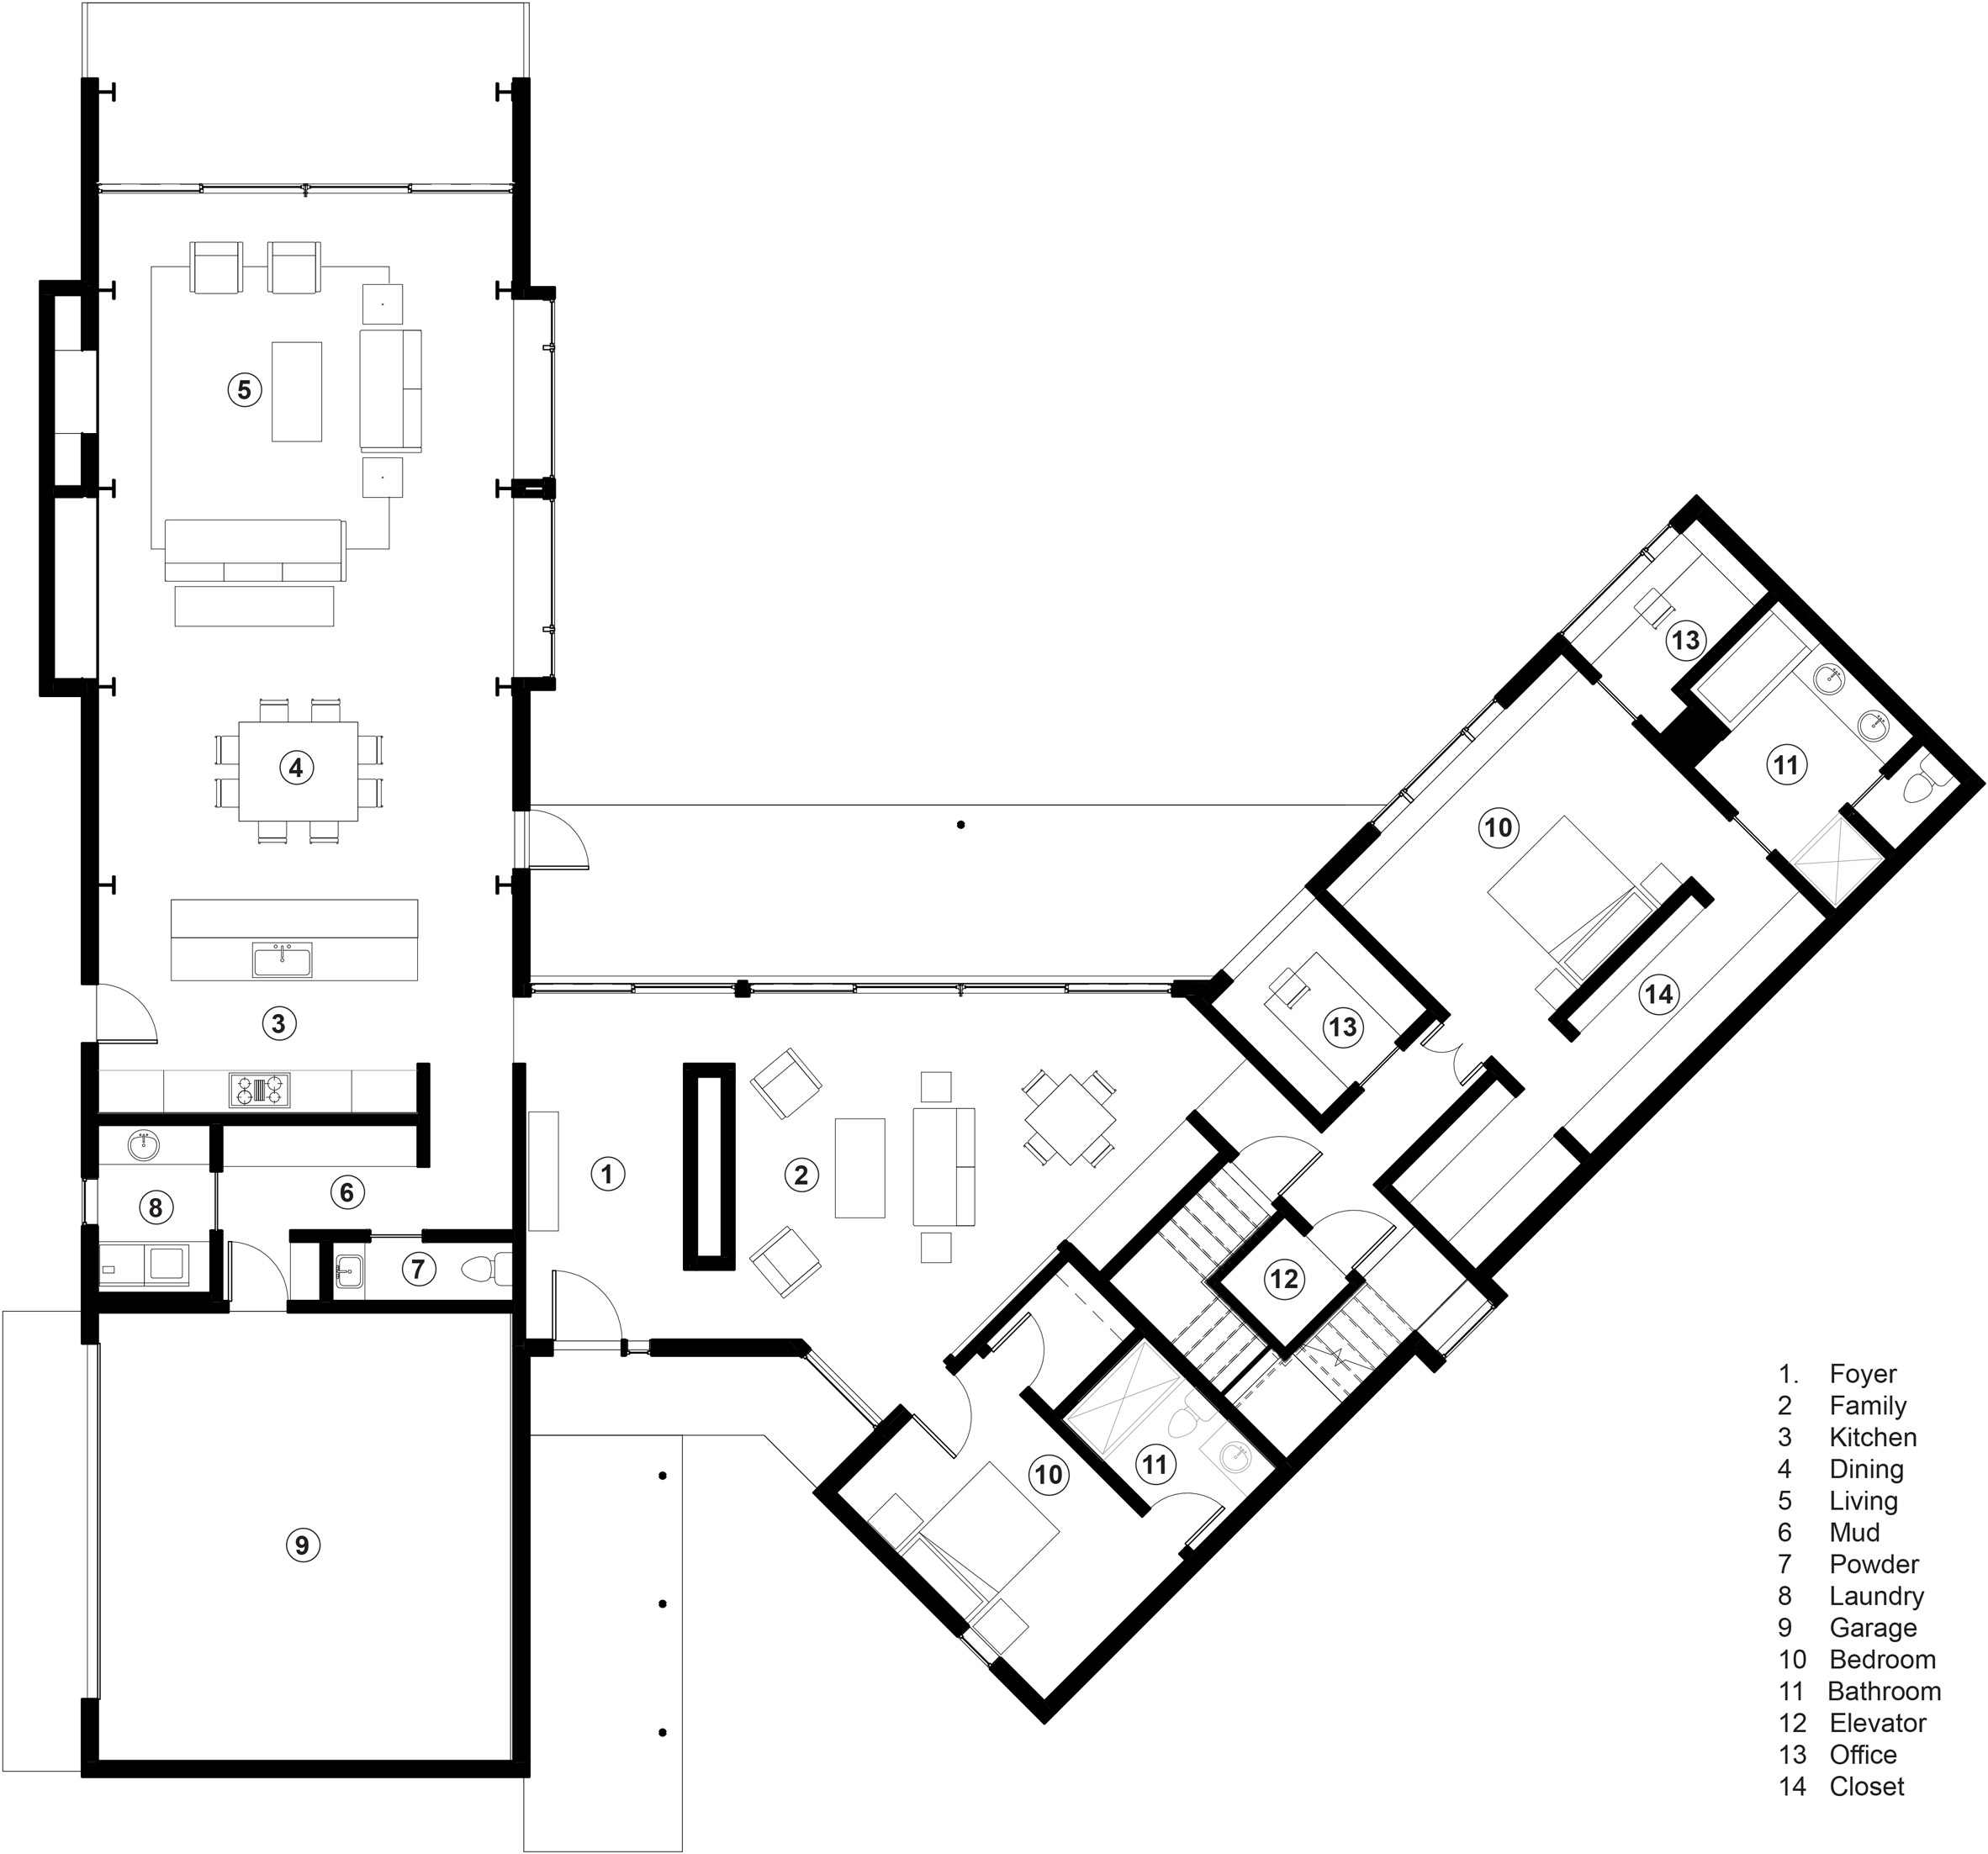 Studio B S V Plan House In Aspen Comprises Black Gabled Forms